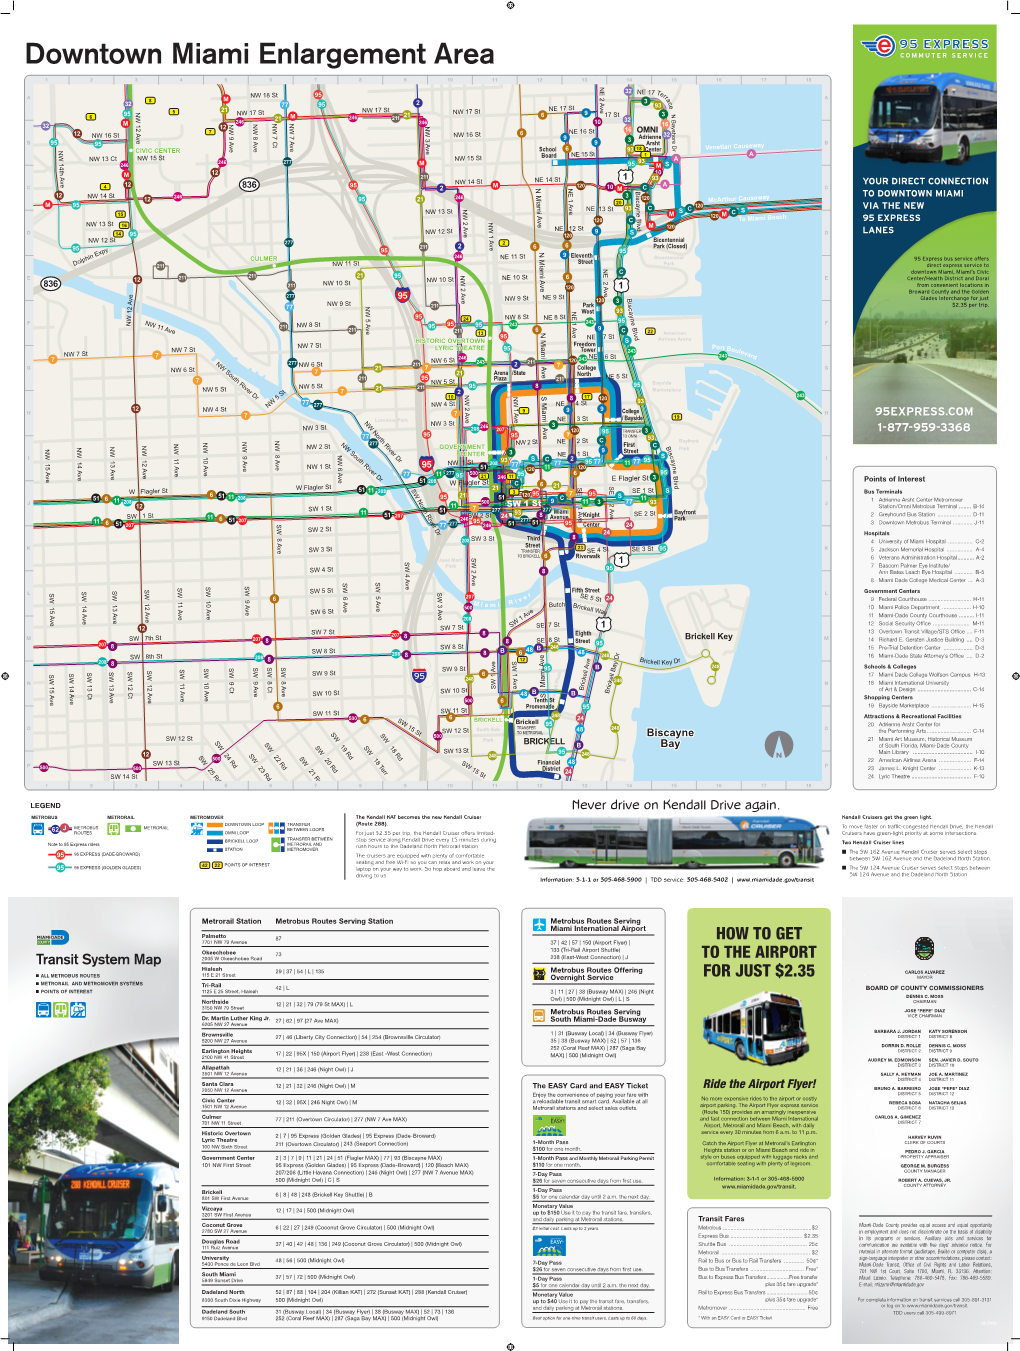 Transit System Map 05-10.Indd